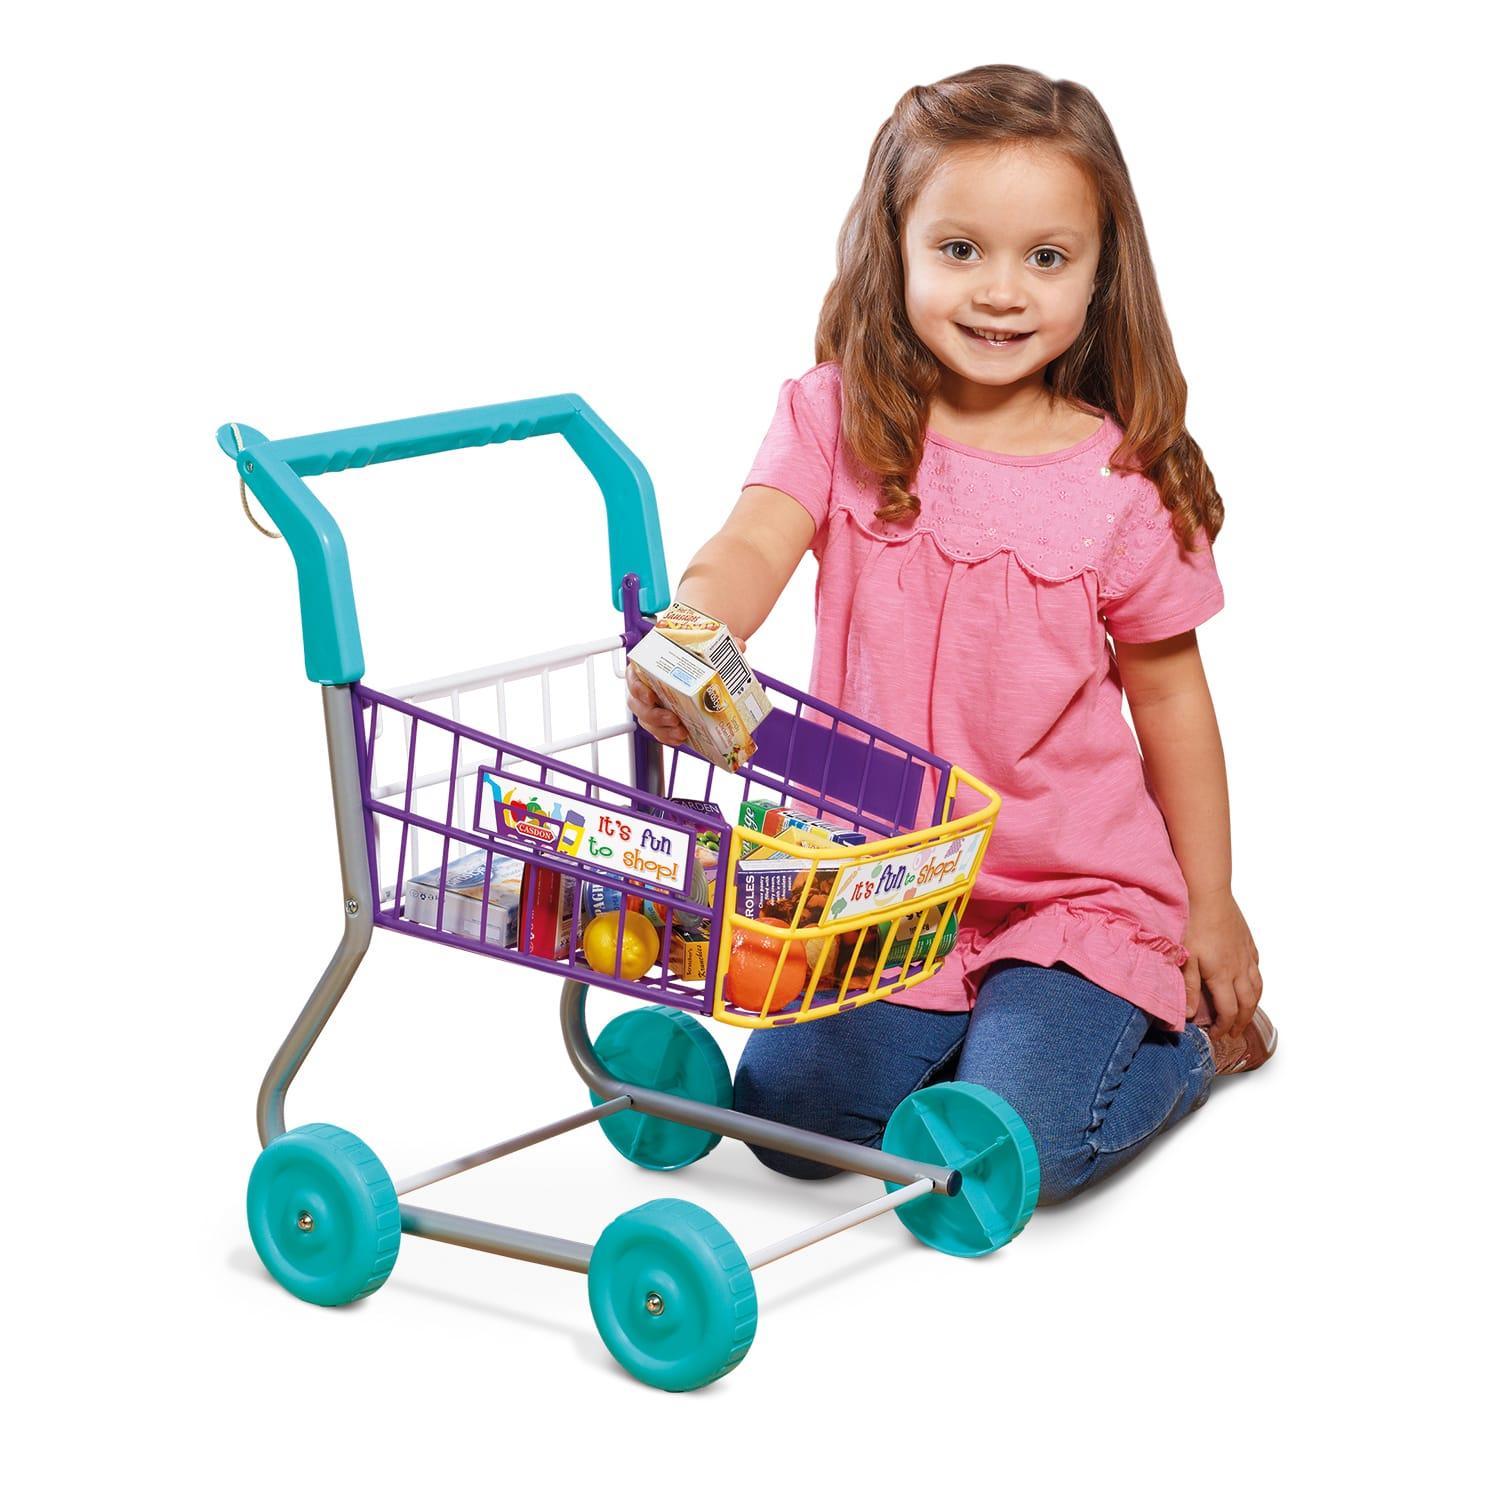 Casdon SHOPPING TROLLEY Little Shopper Role Play Pretend Food Kids Toy 3 yrs BN 